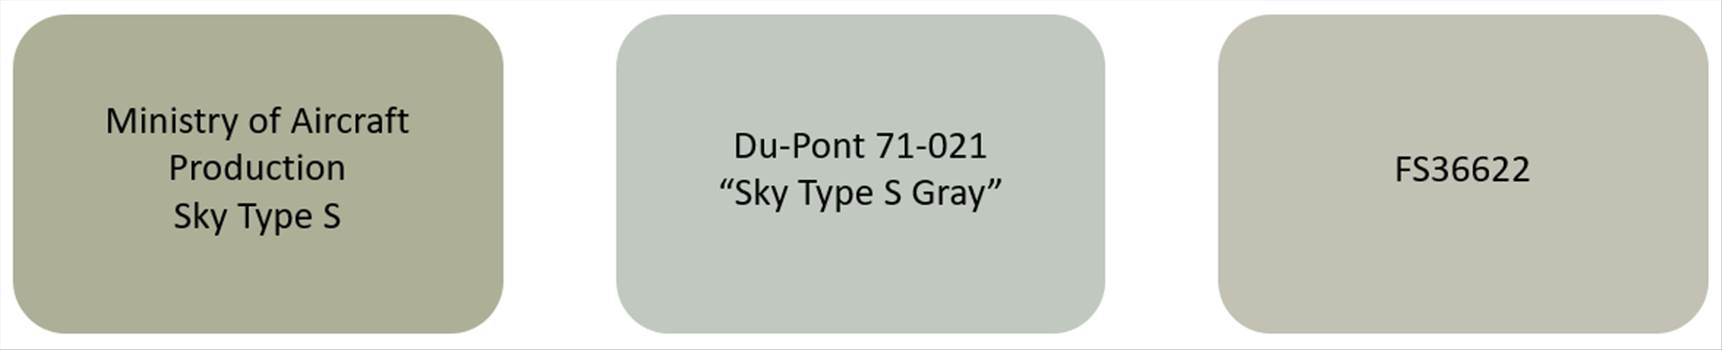 DuPont 71-021.png - 